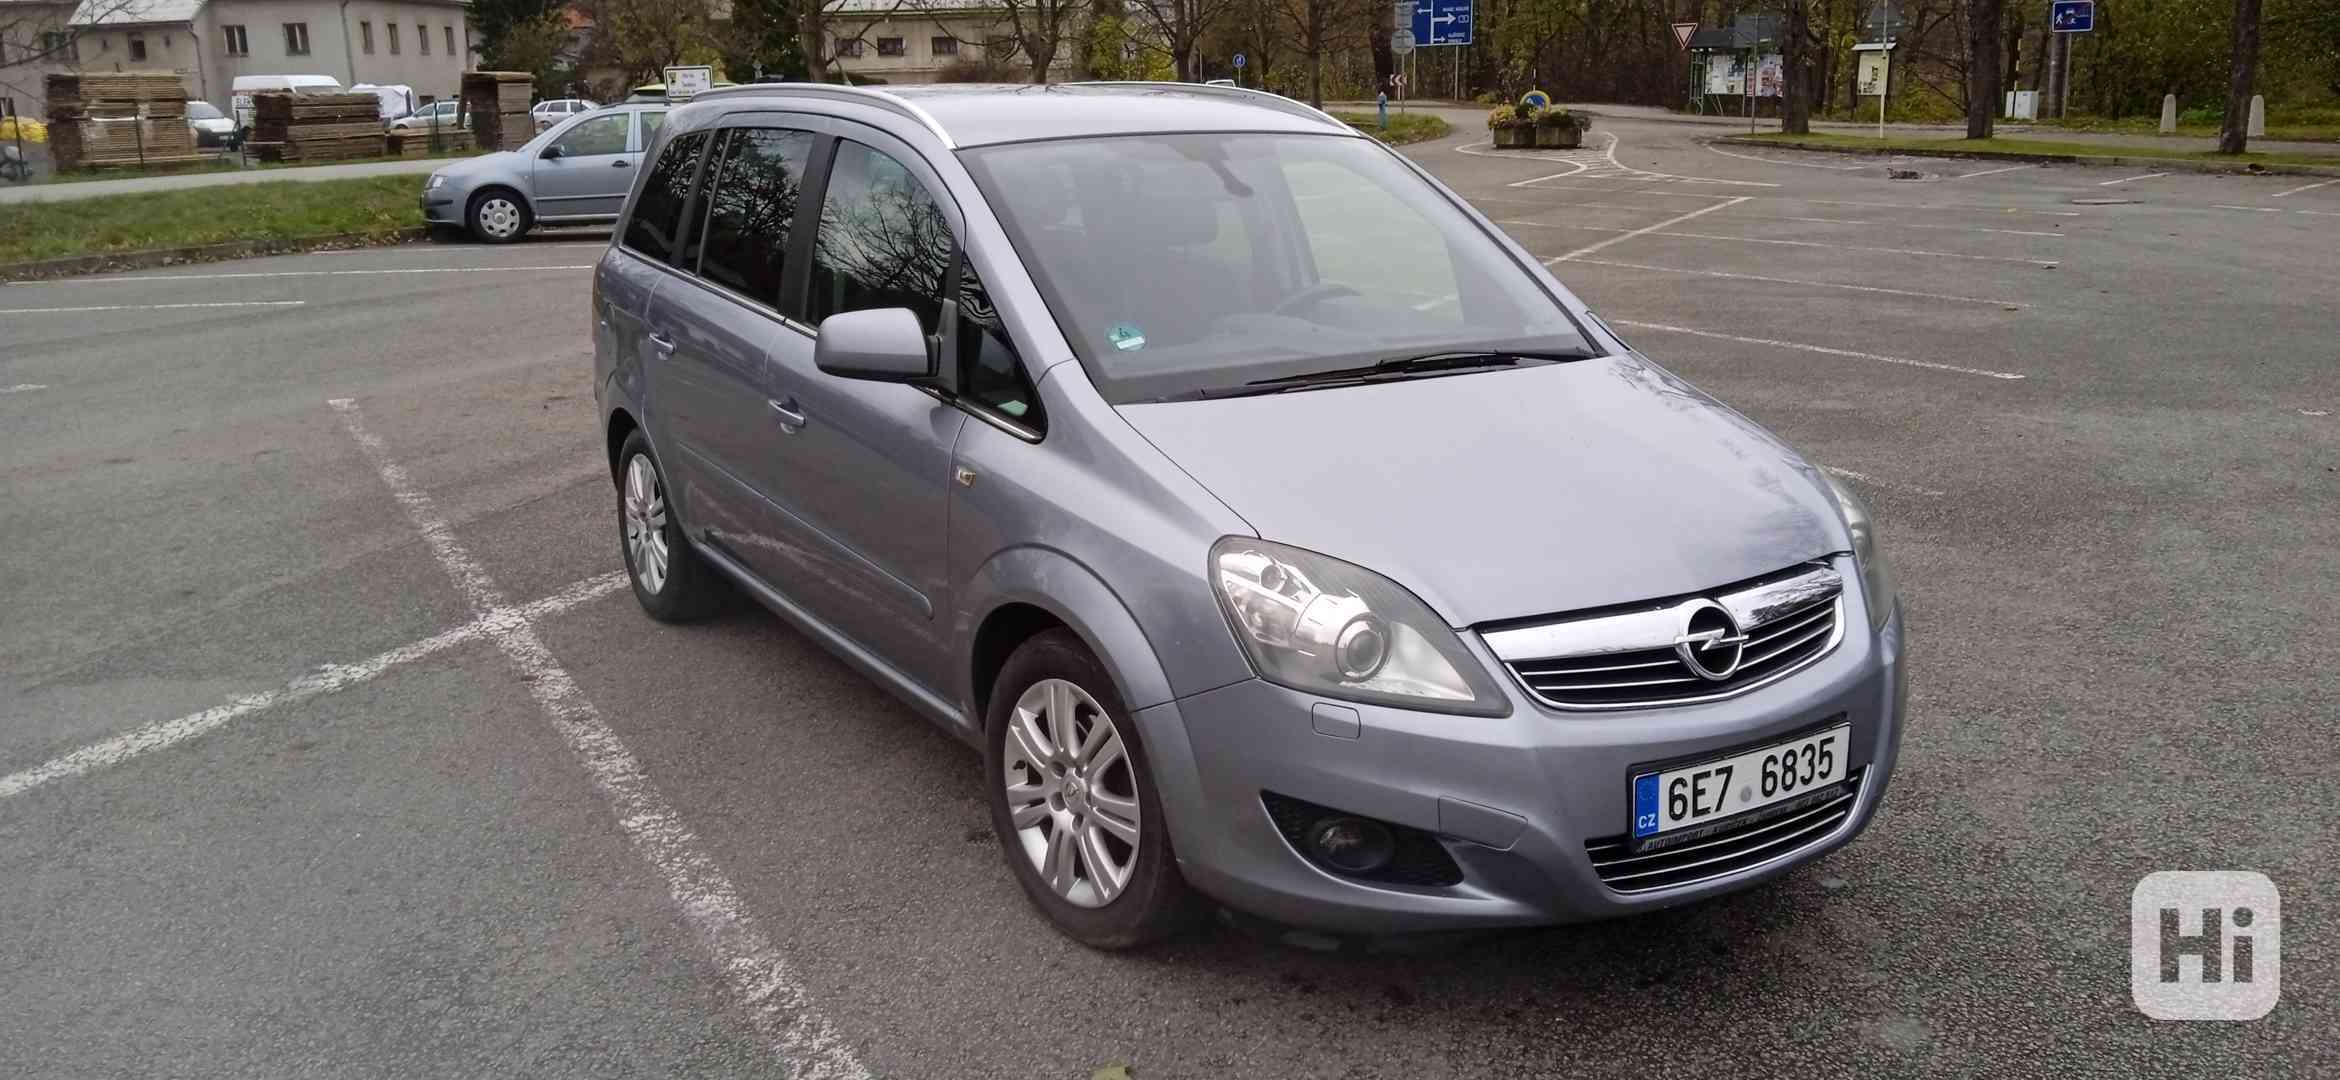 Opel Zafira 2010 - foto 1